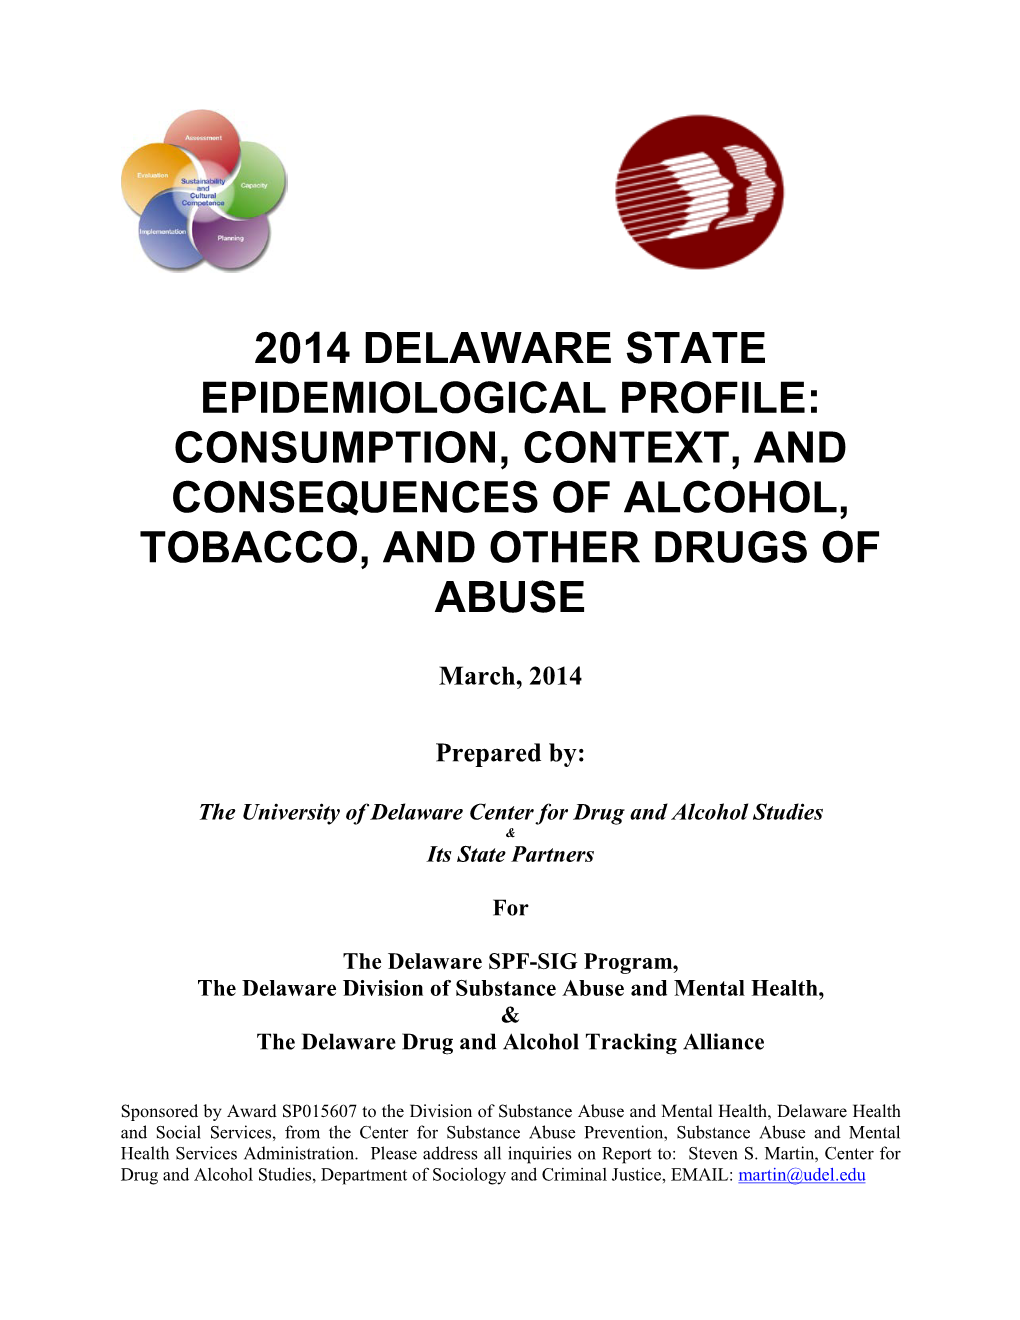 2014 Delaware Epidemiological Report